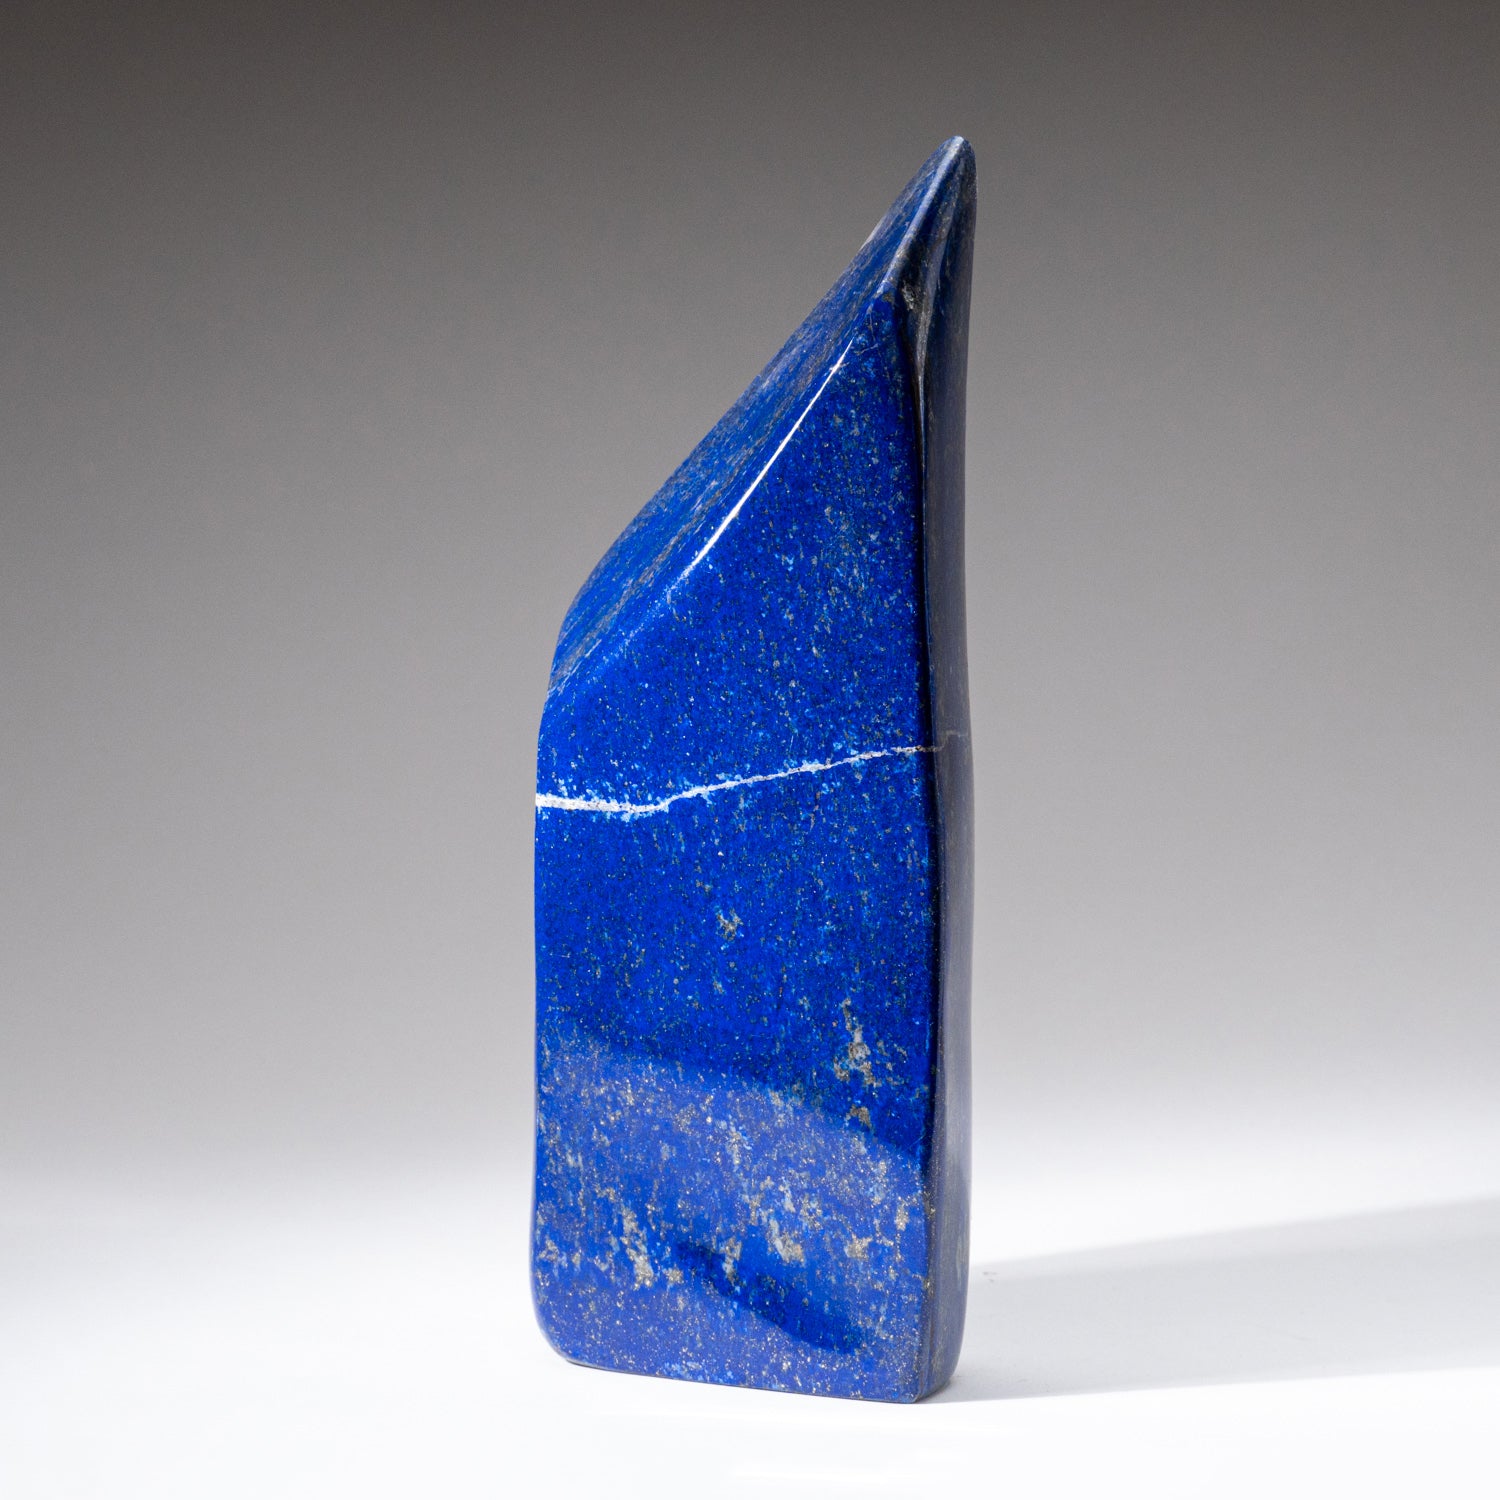 Polished Lapis Lazuli Freeform from Afghanistan (4.8 lbs)